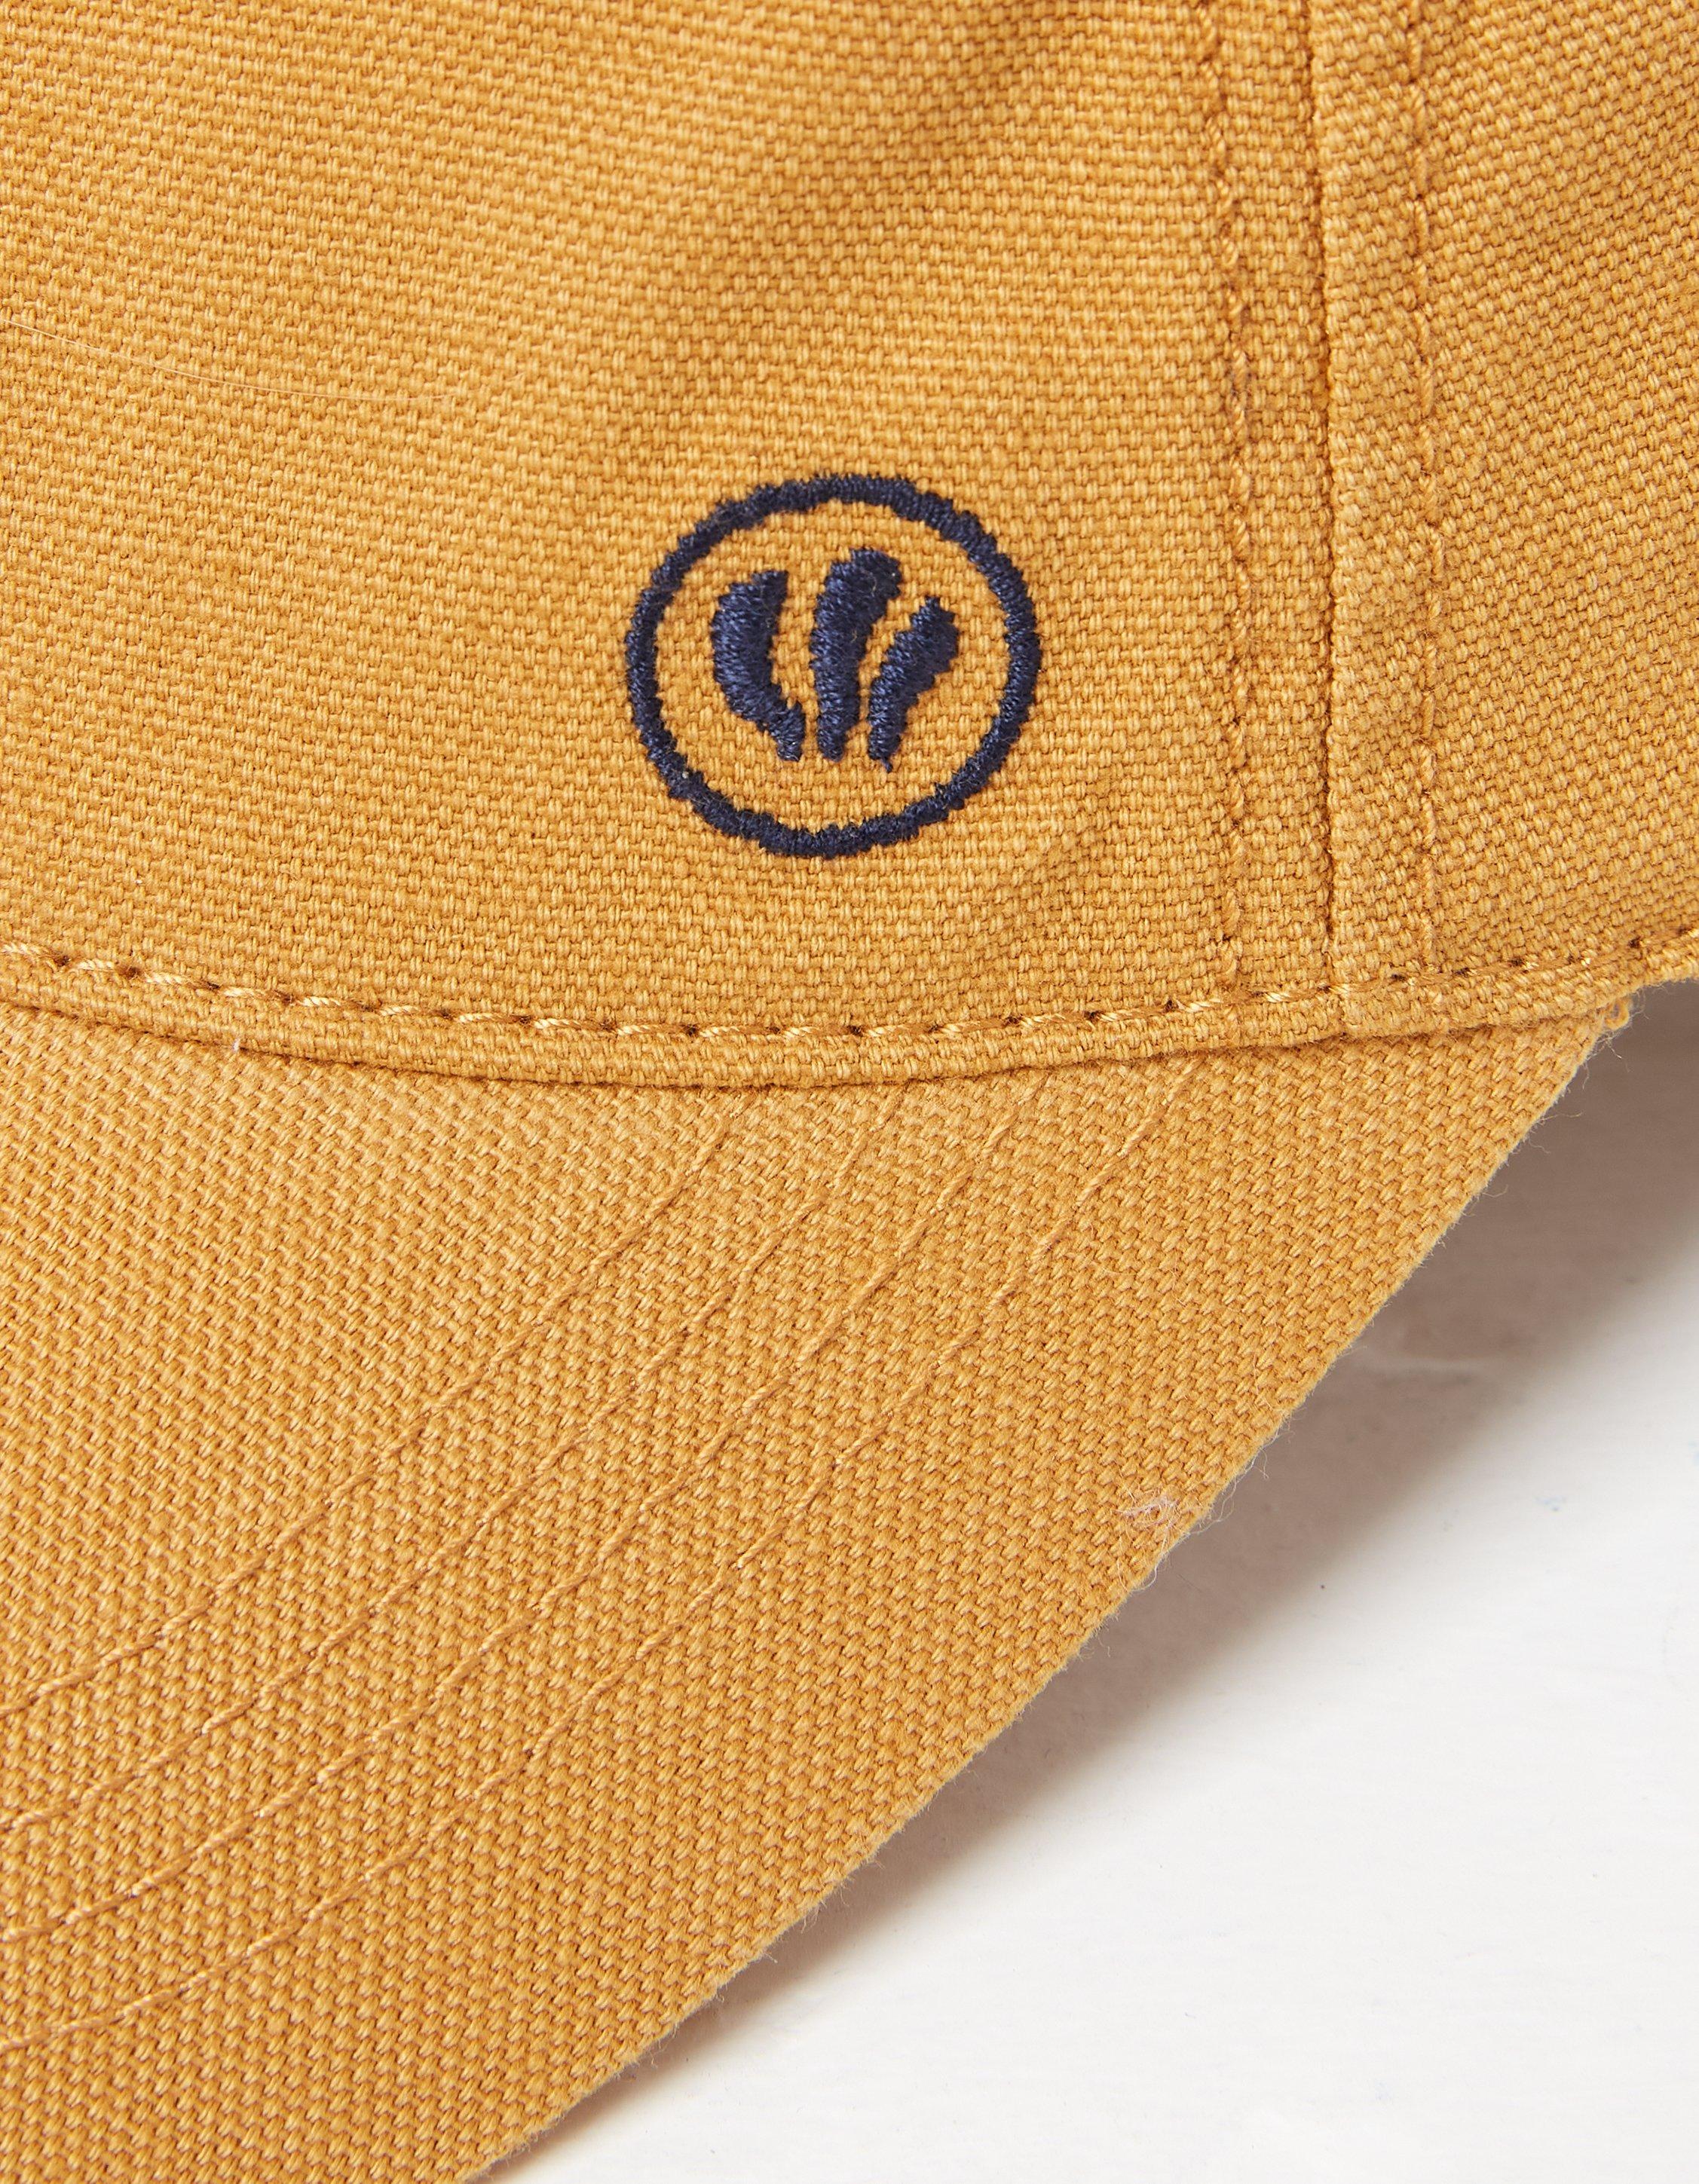 Baseball Hats Cap, Mustard Yellow Plain